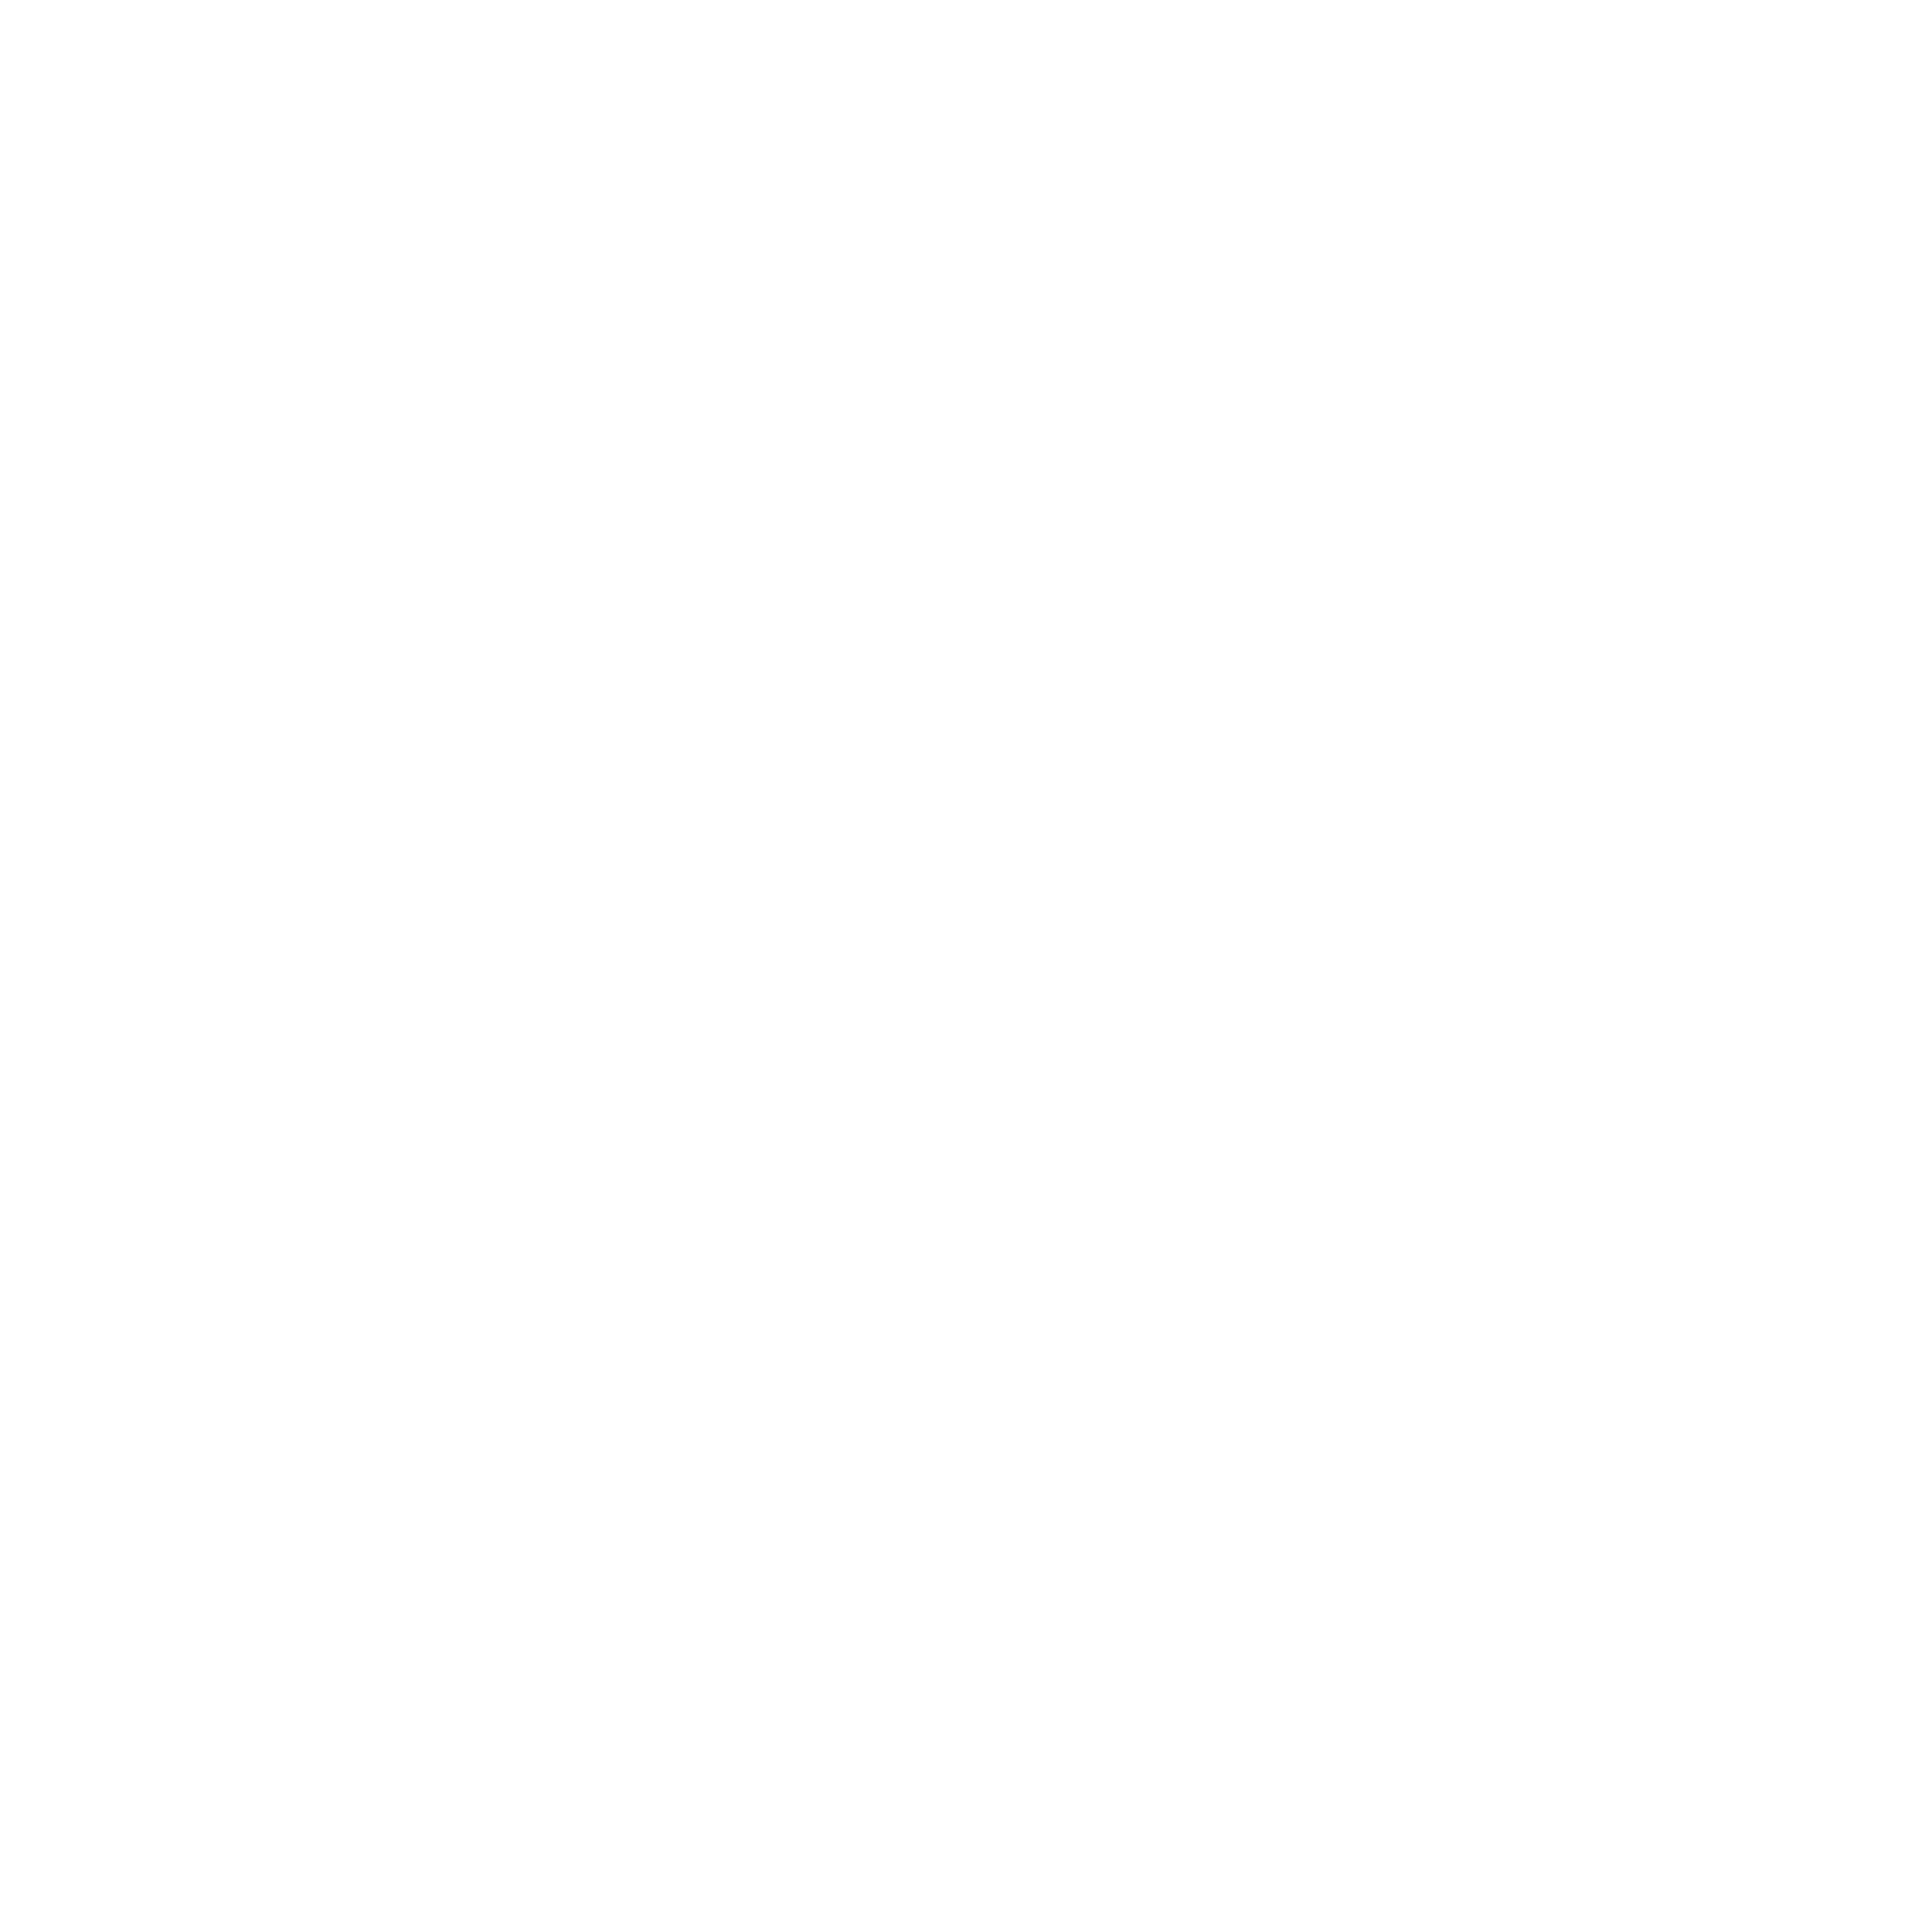 Jack Tech